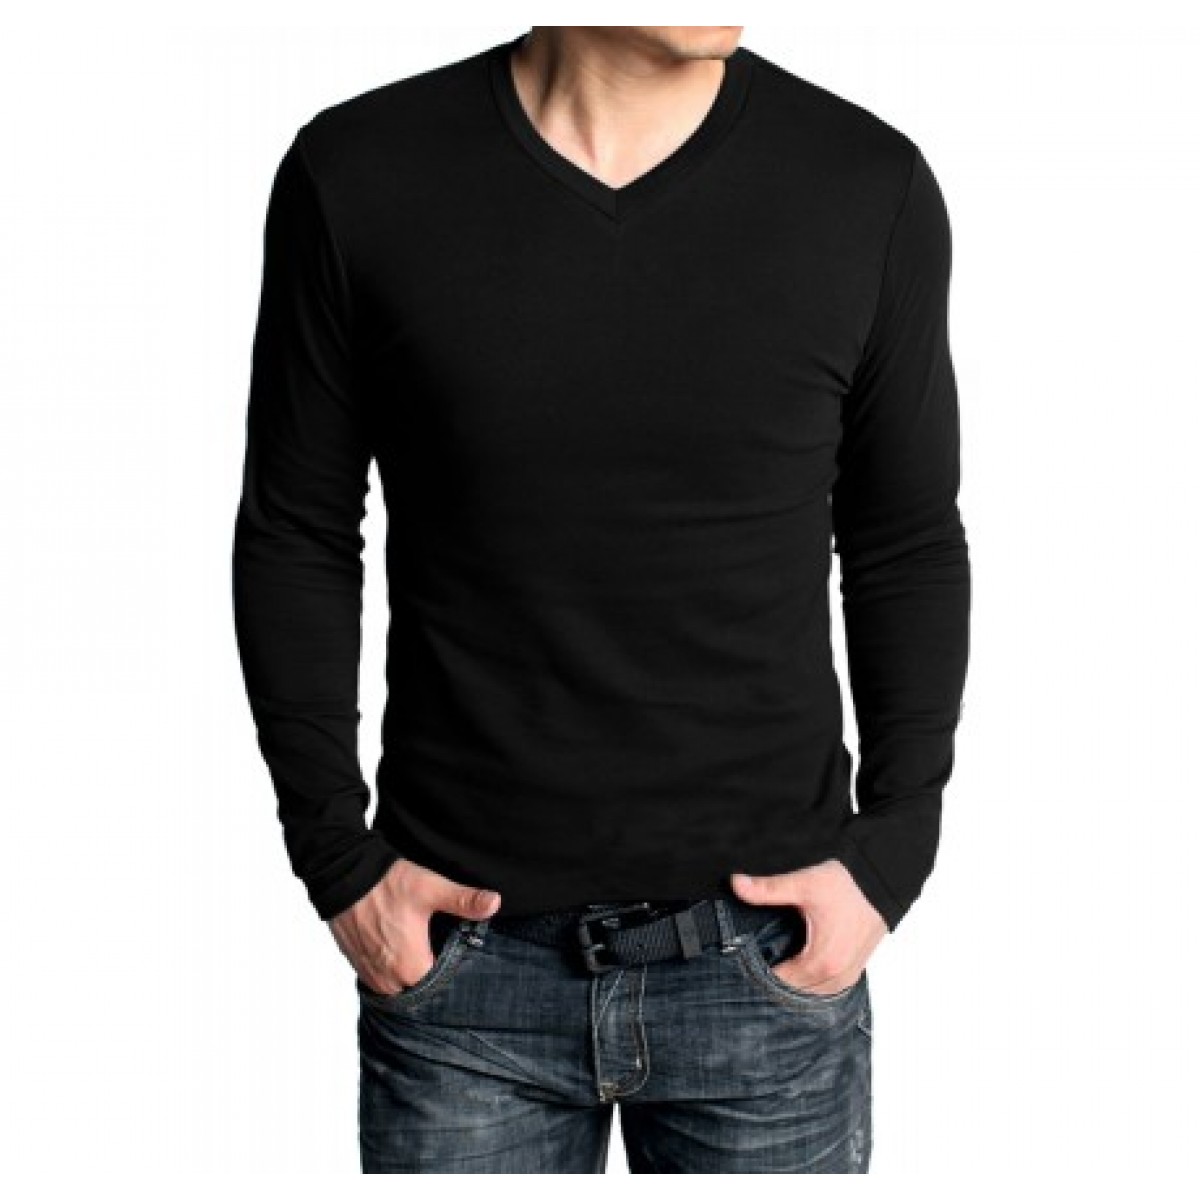 Buy Wintex Men's Black V-Neck T-shirt Online @ ₹299 from ShopClues